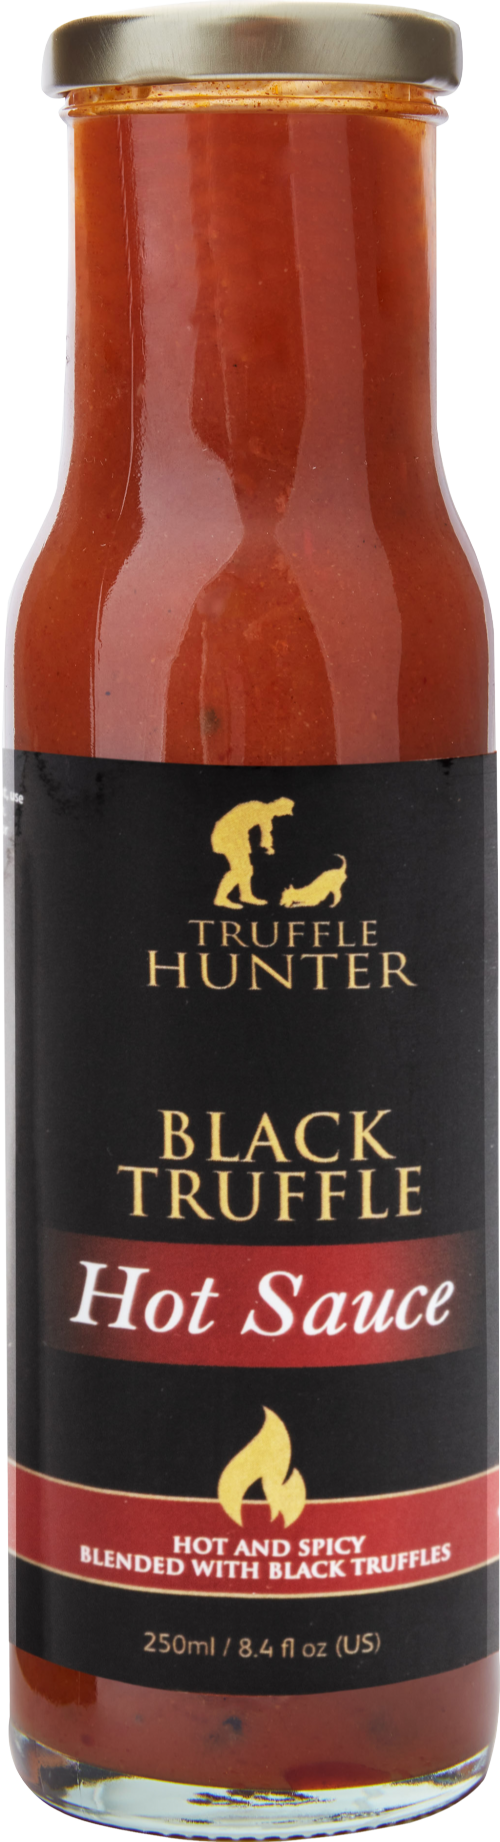 TRUFFLE HUNTER Black Truffle Hot Sauce 250ml